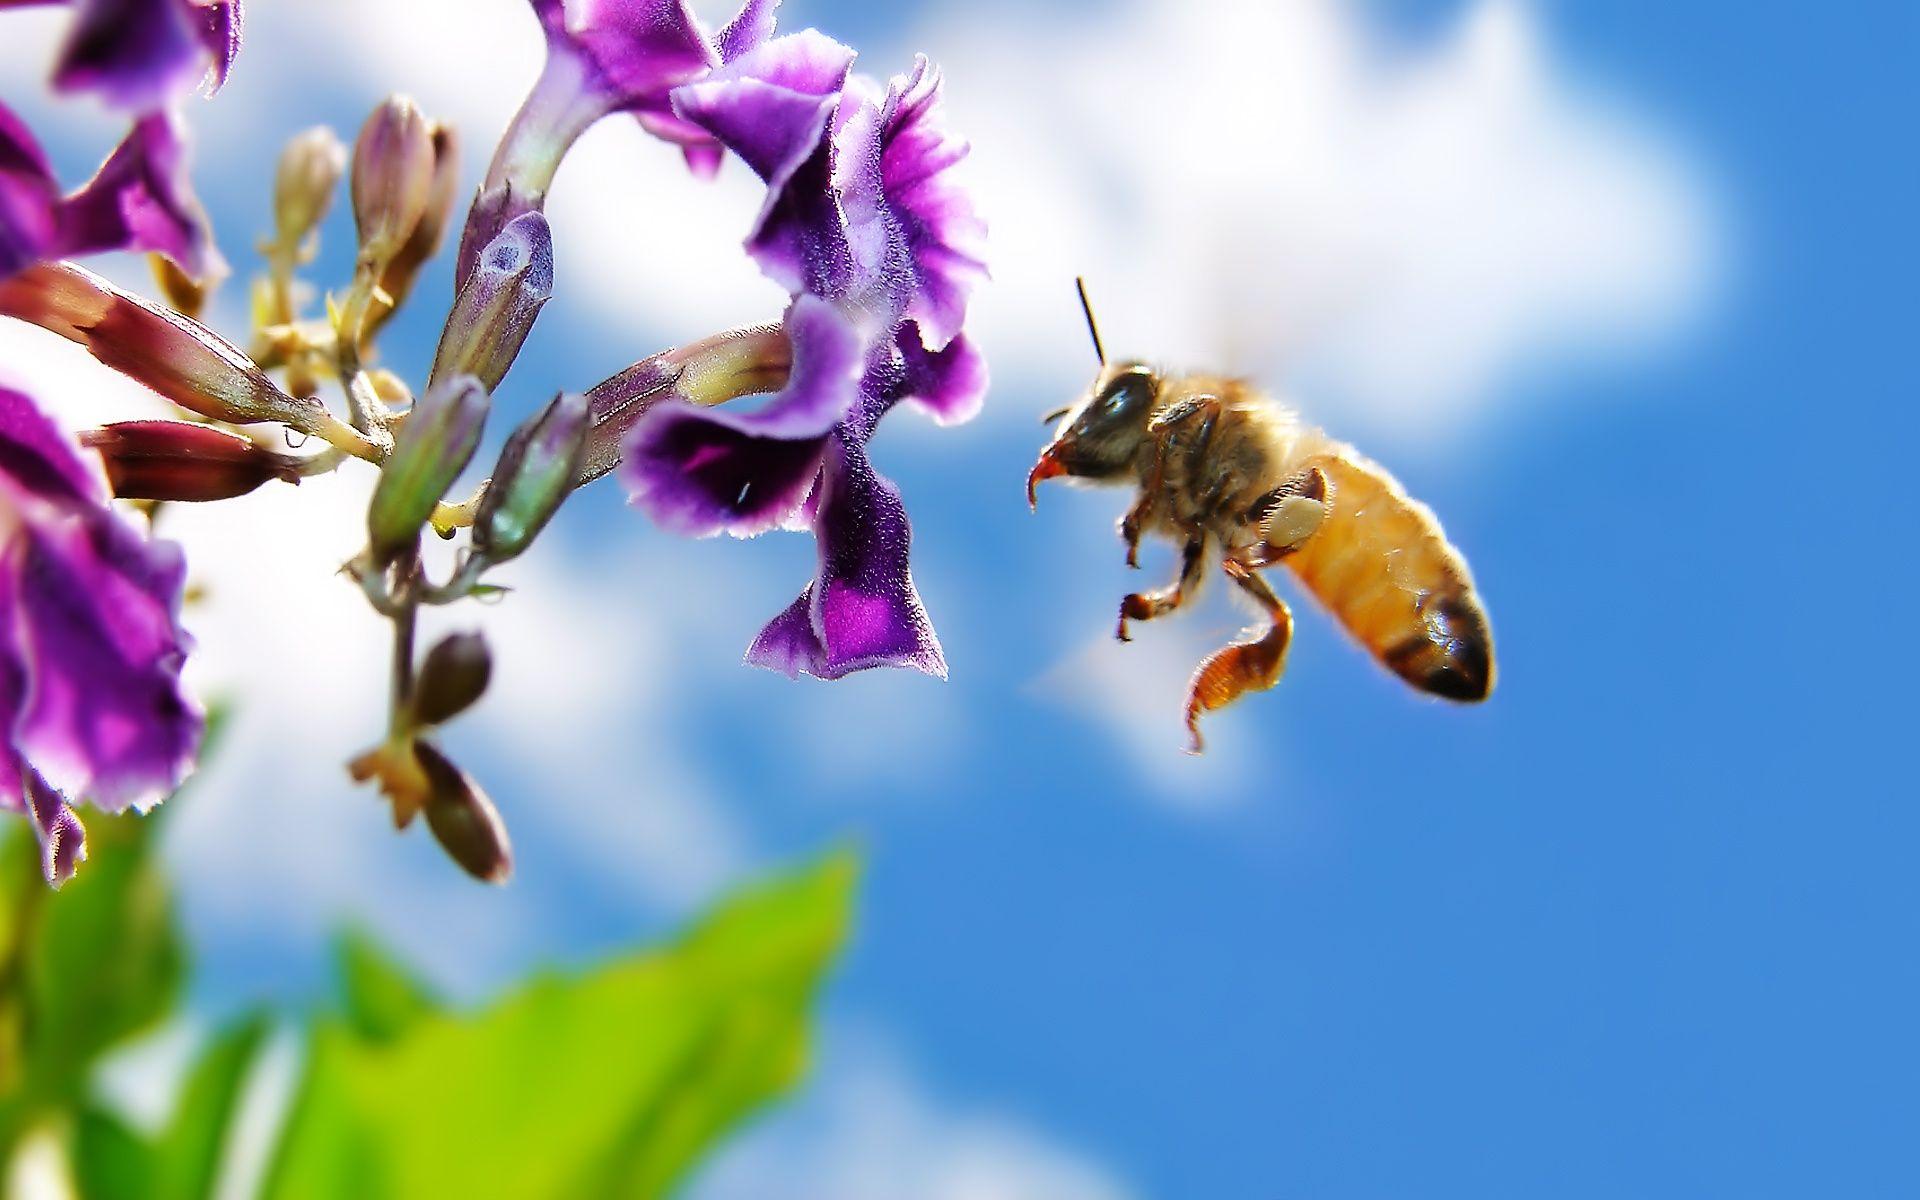 Bee on Flower Widescreen Wallpaper in jpg format for free download